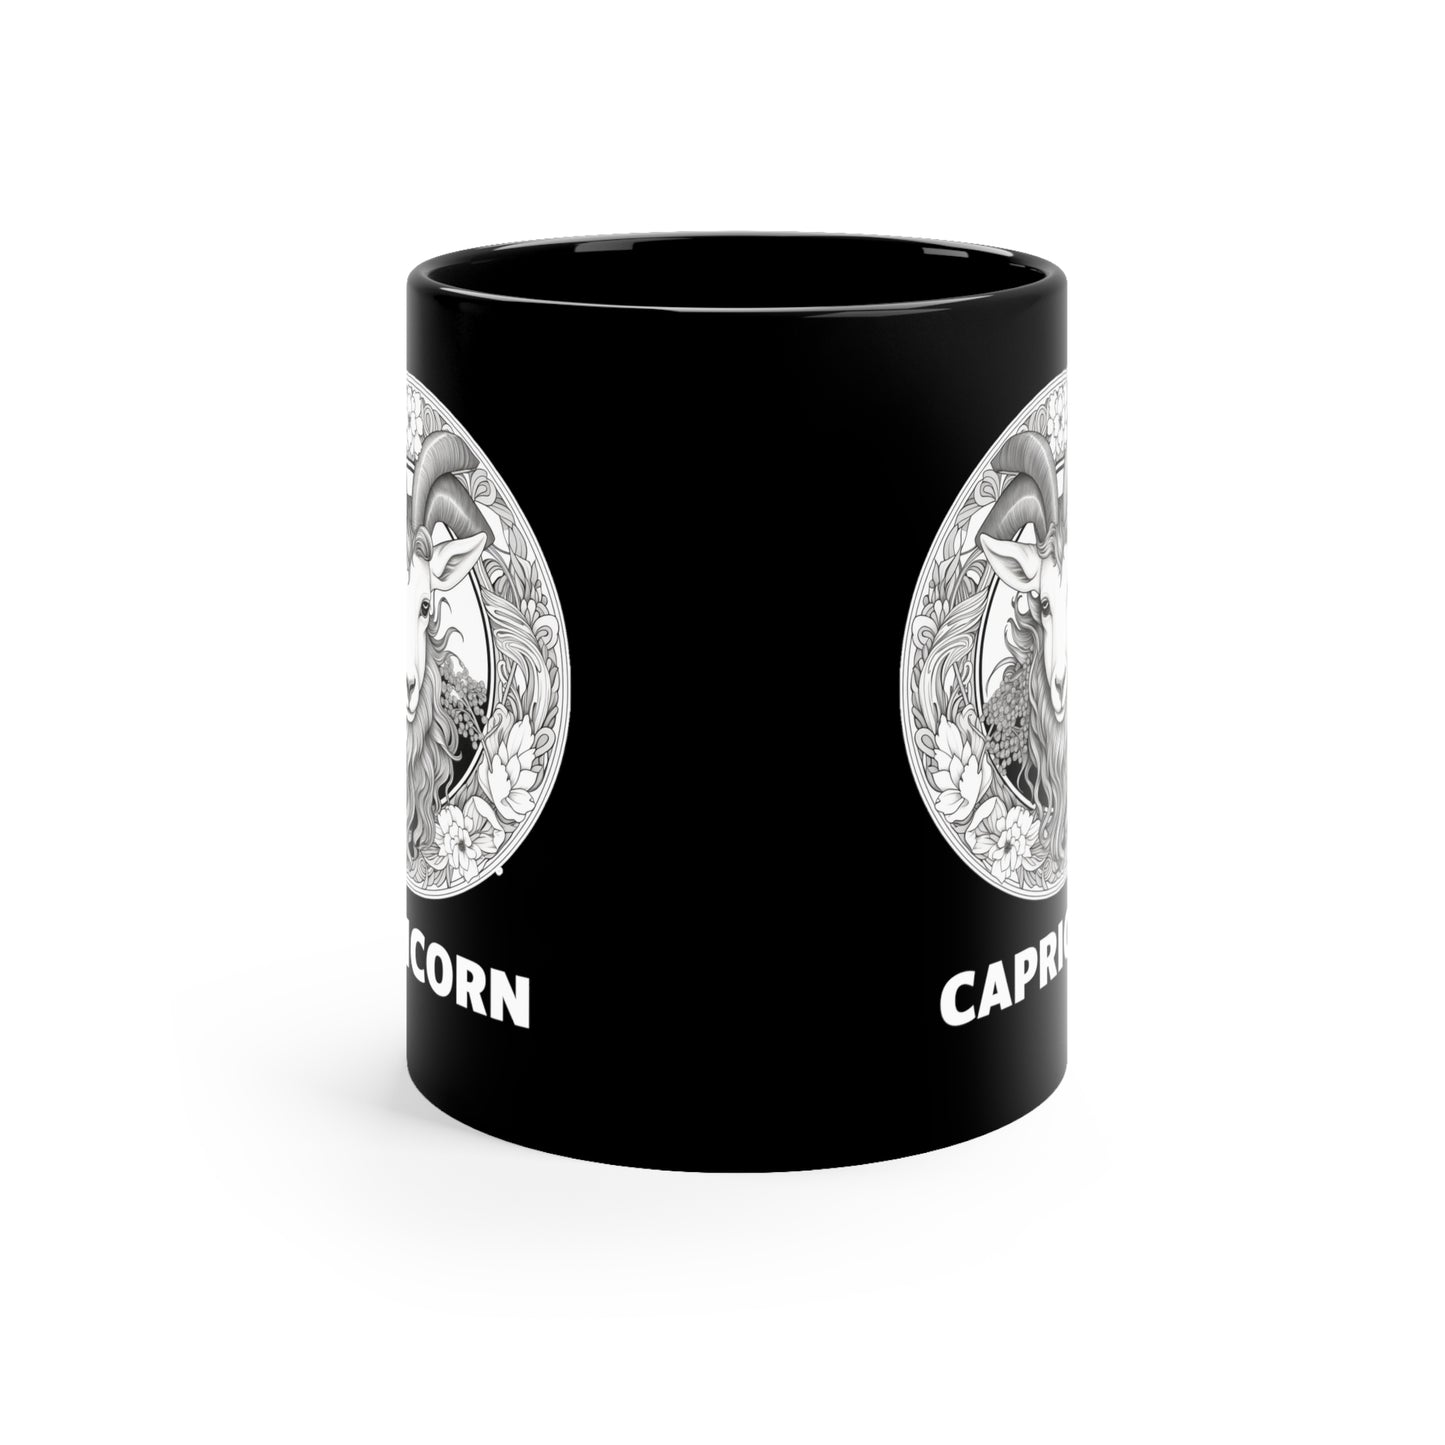 Capricorn 11oz Black Mug